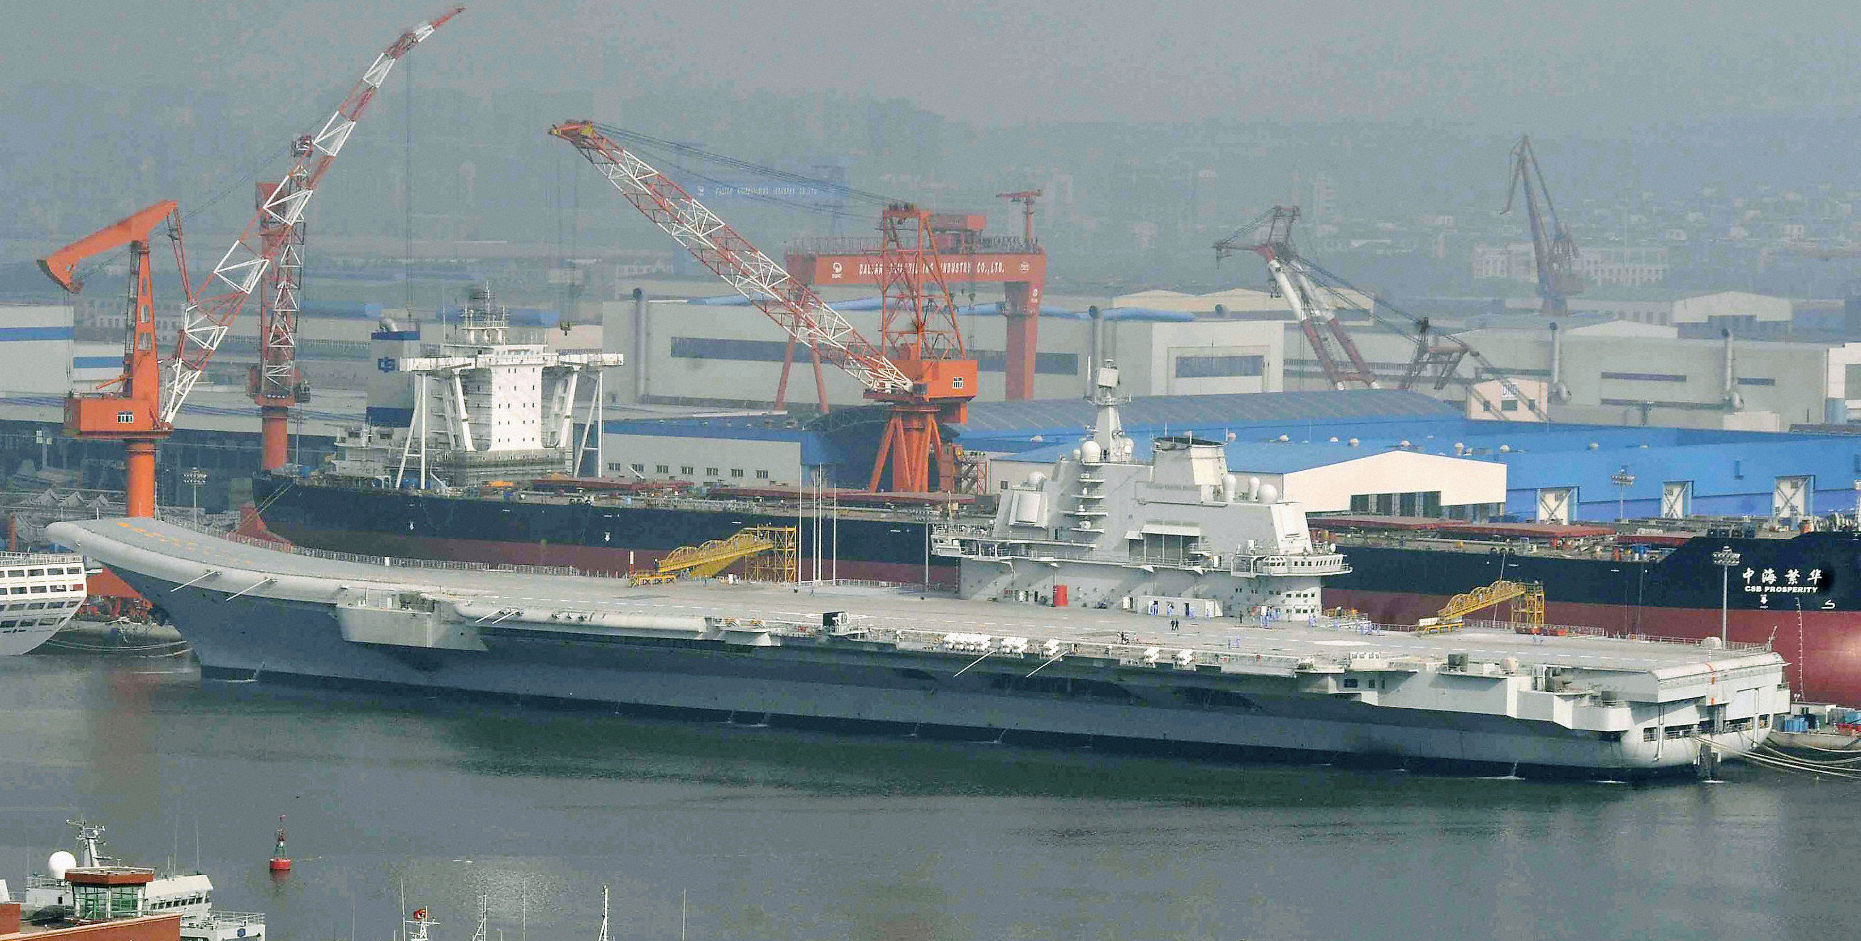 http://www.scmp.com/sites/default/files/galleries/2012/09/24/china_aircraft_carrier_tok801_23473341.jpg